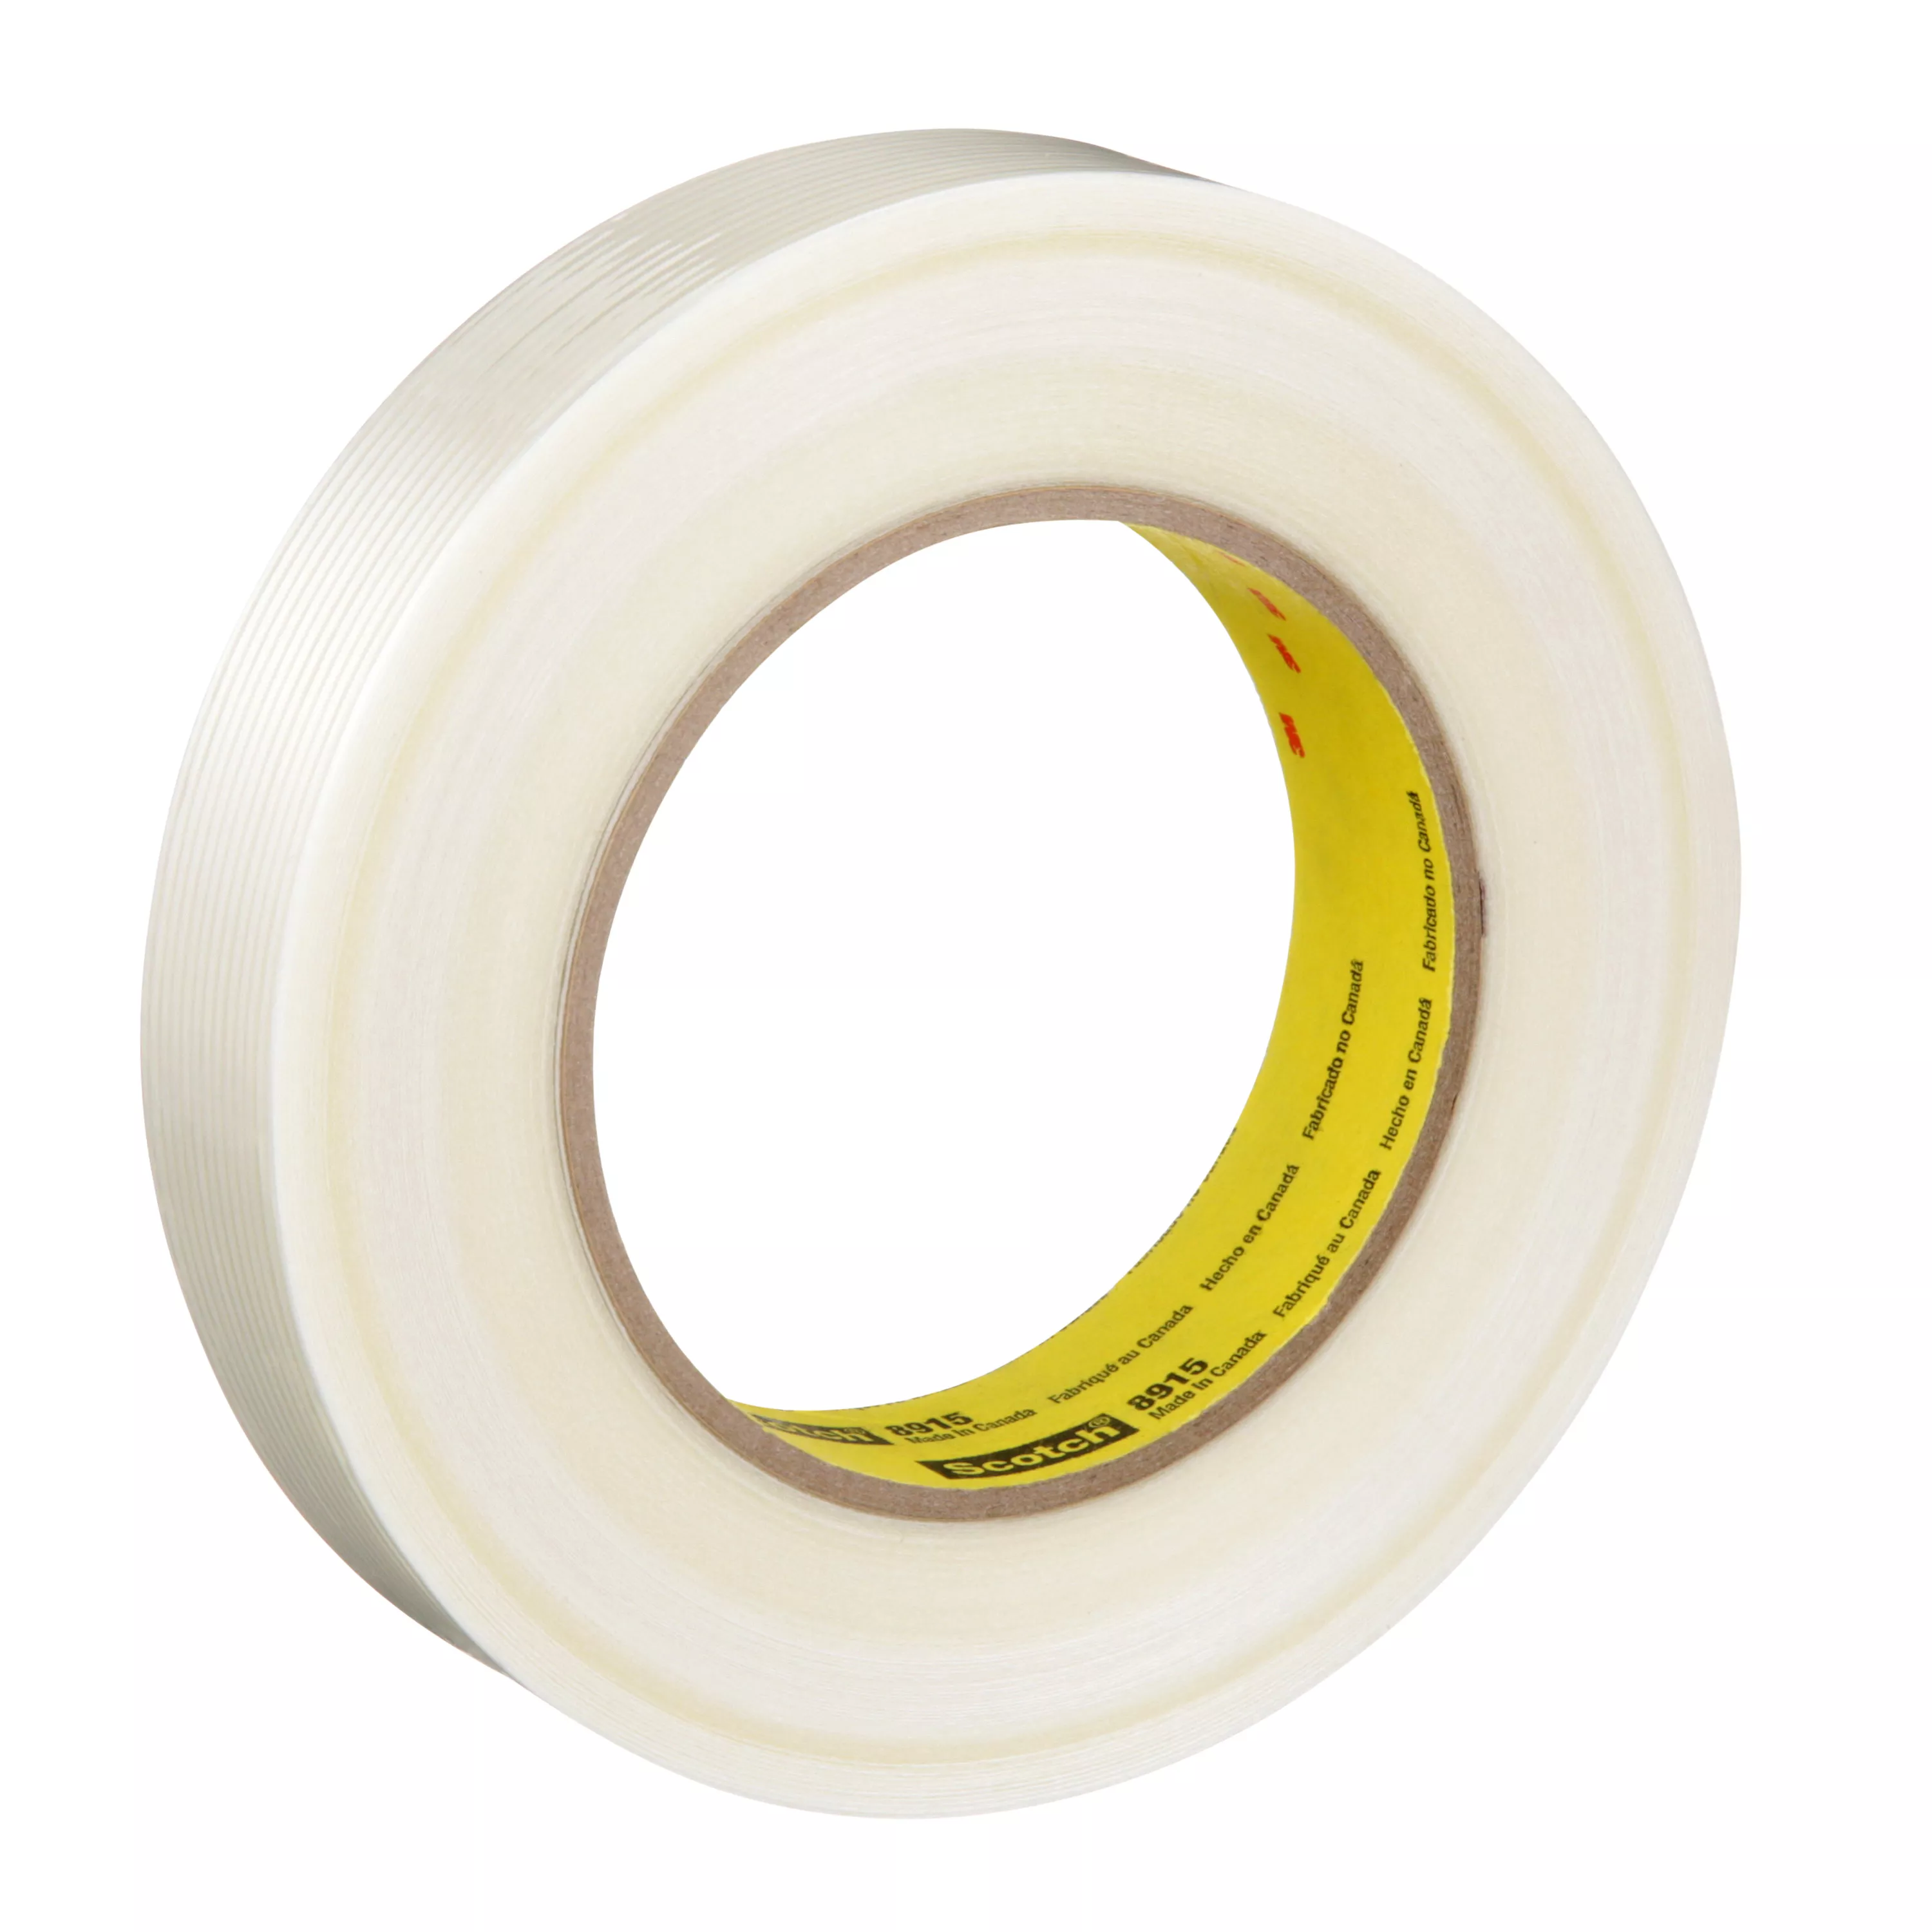 Scotch® Filament Tape Clean Removal 8915, 24 mm x 55 m, 6 mil, 36
Roll/Case